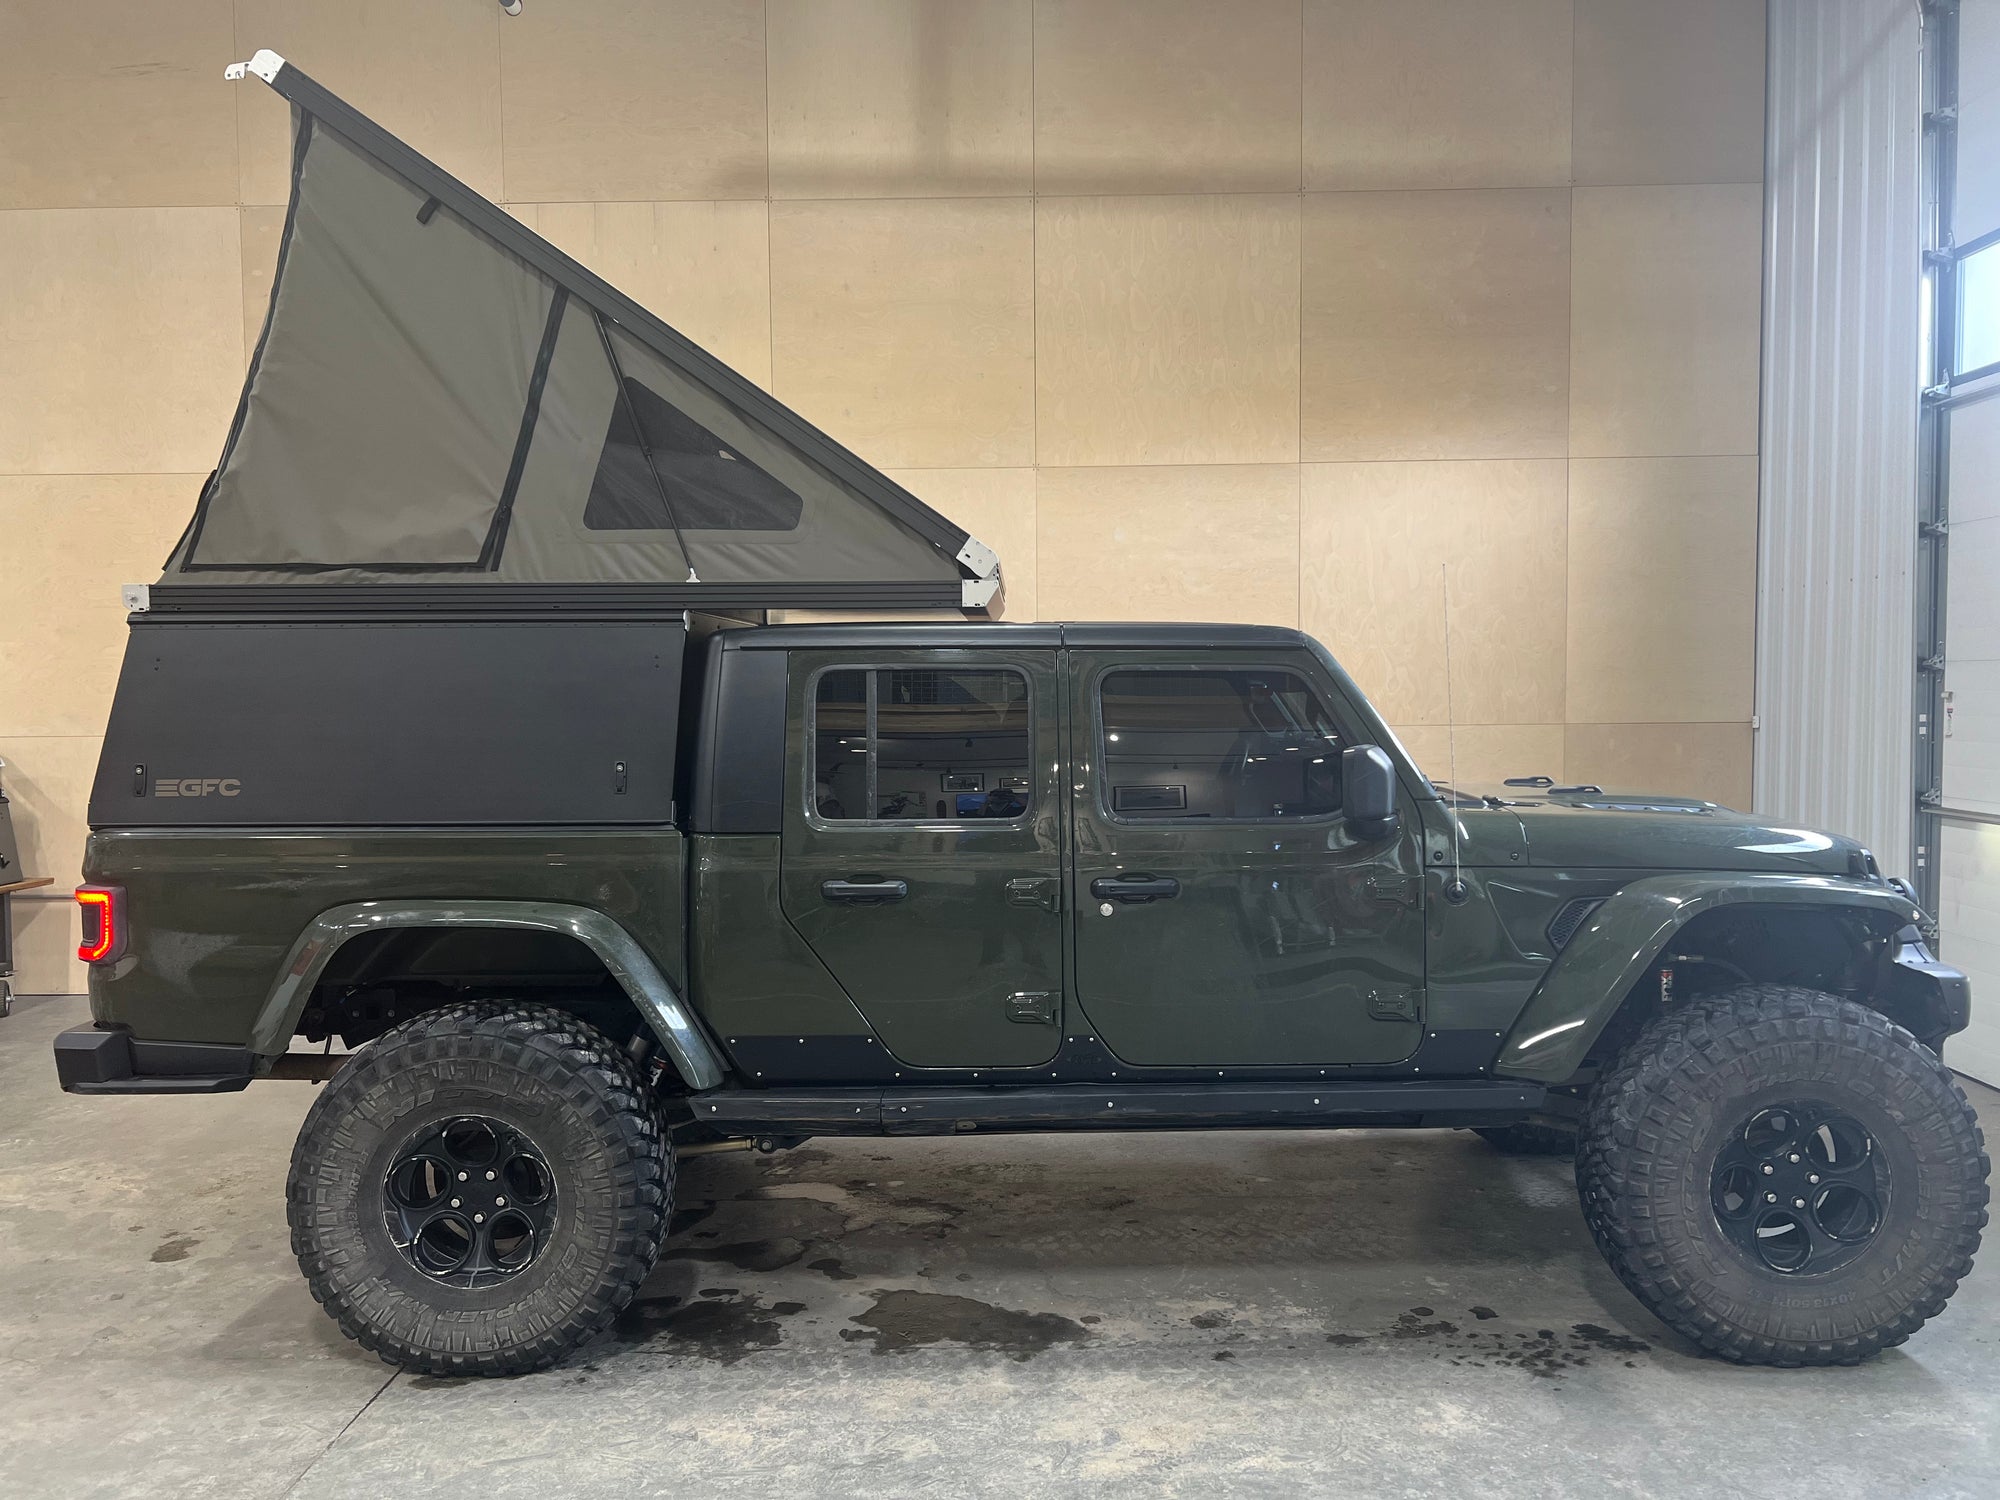 2021 Jeep Gladiator Camper - Build #4860